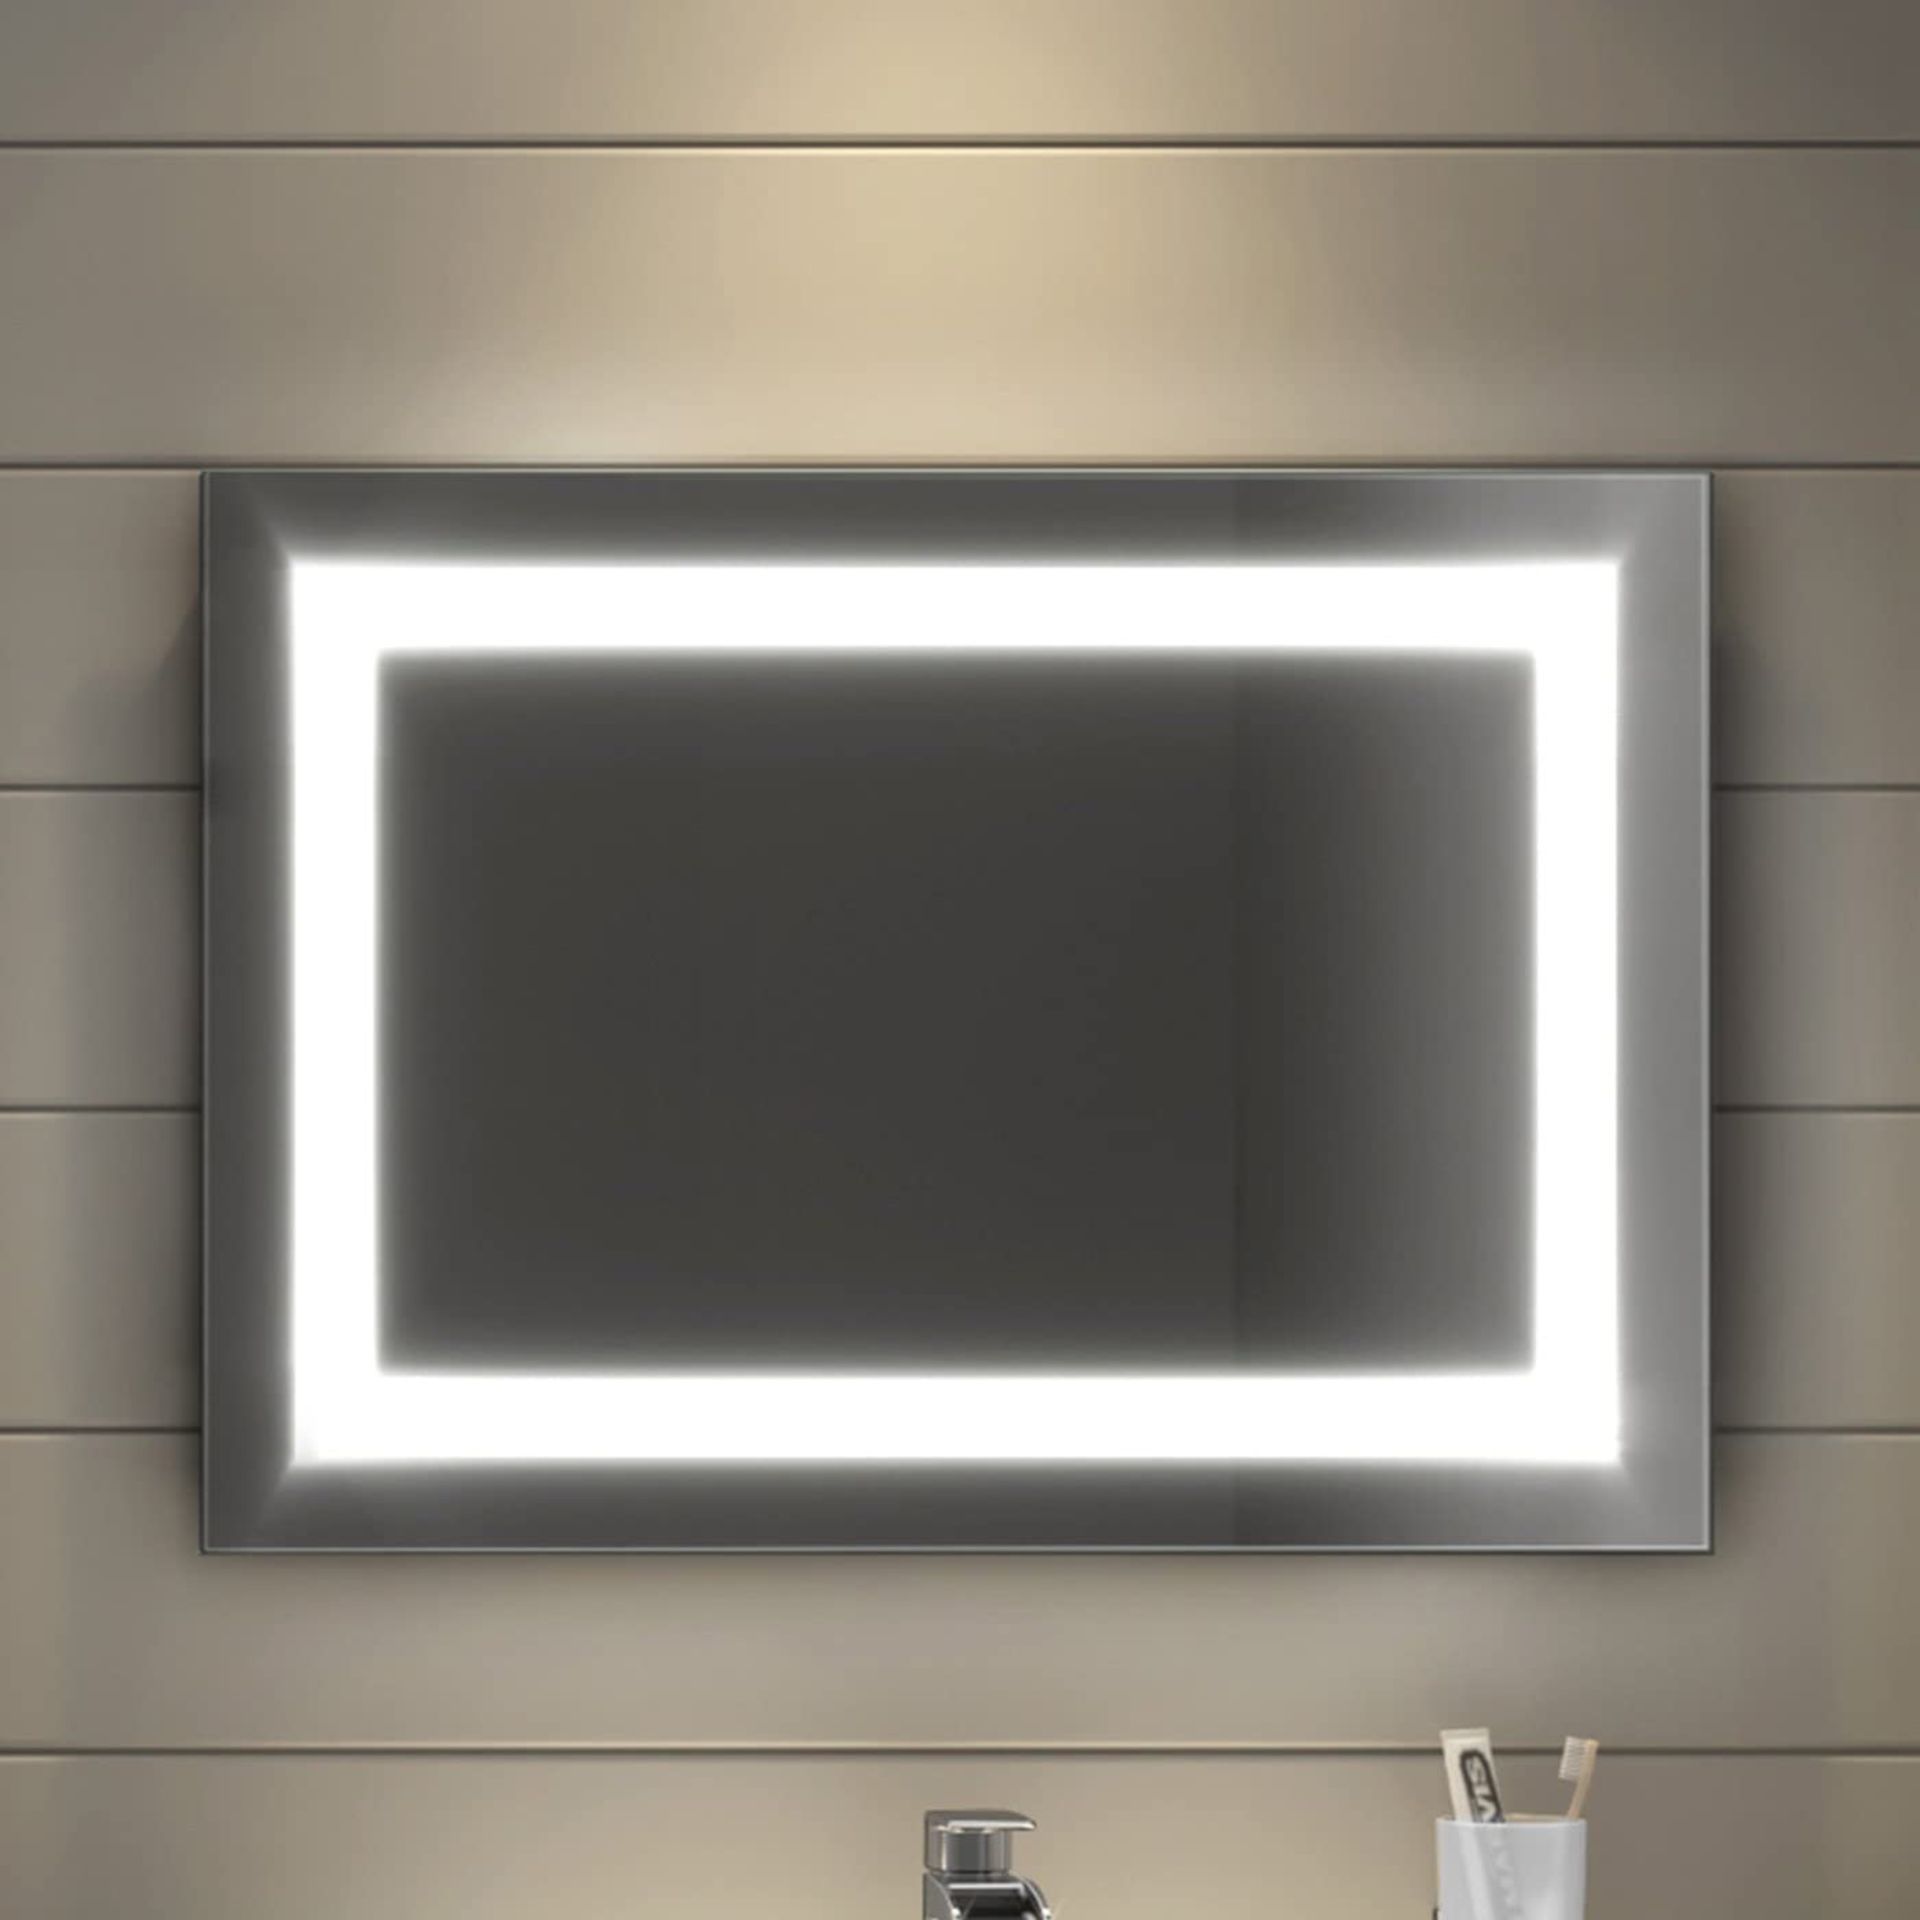 NEW 500x700mm Modern Illuminated Backlit LED Light Bathroom Mirror + Demister Pad. RRP £599.99... - Image 2 of 2